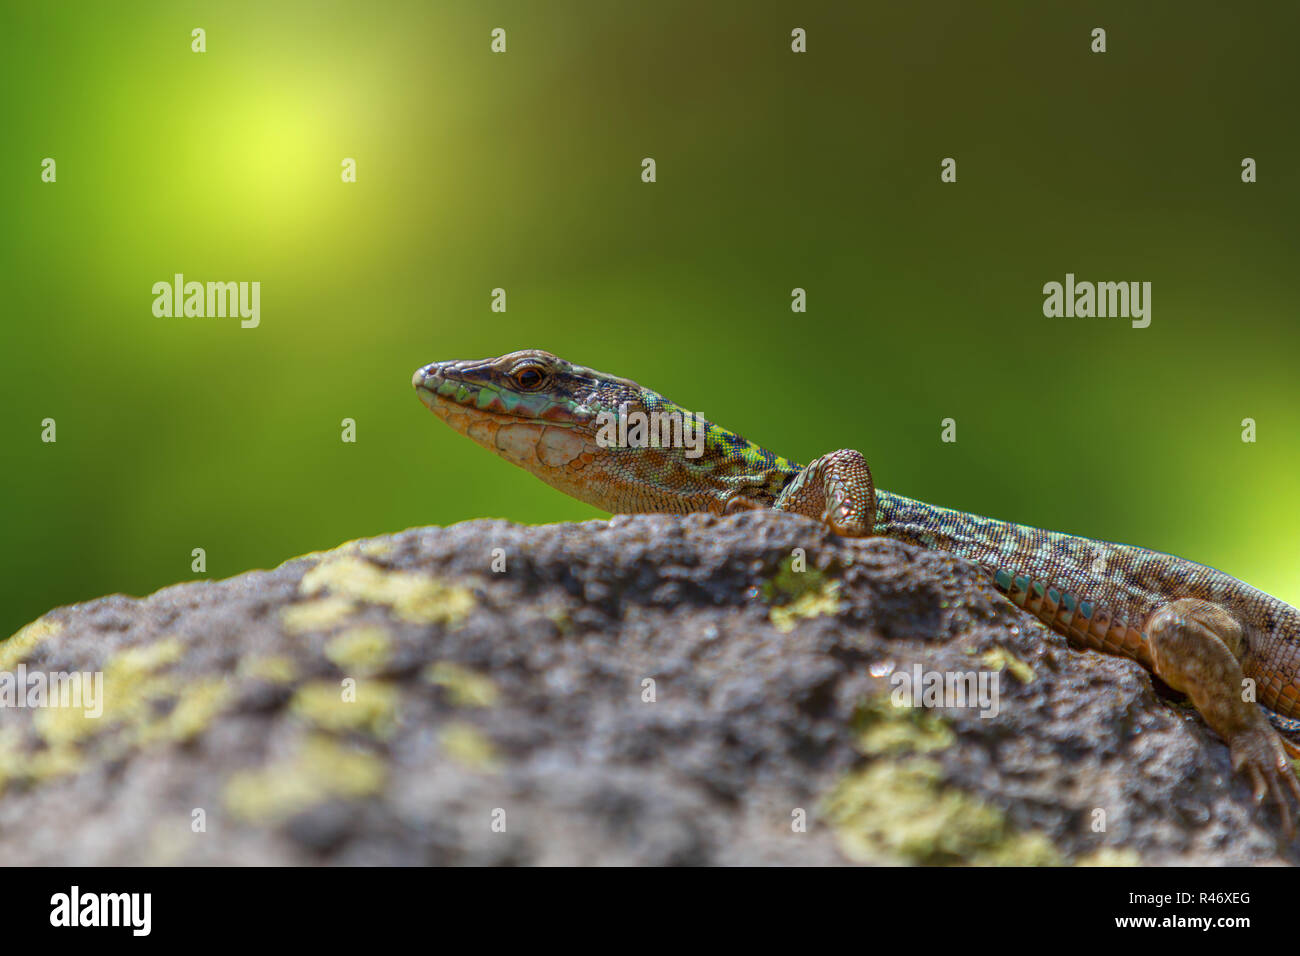 lizard on stone Stock Photo